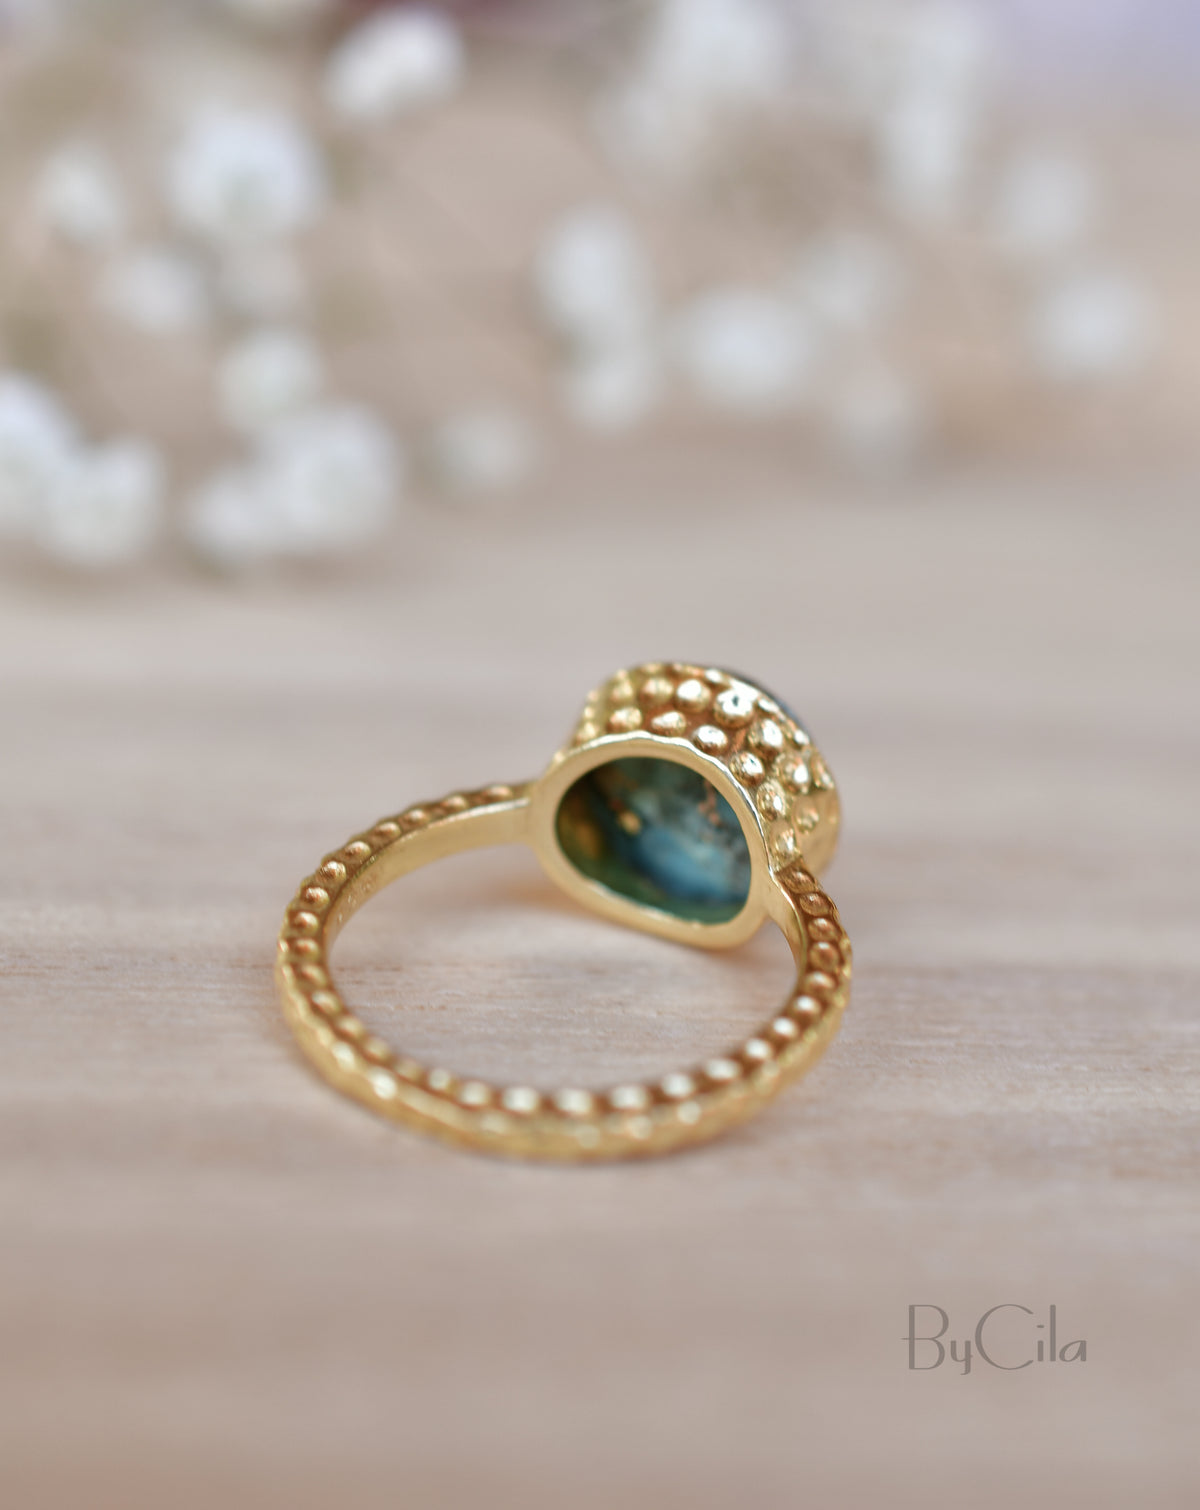 Marcela Ring * Copper Turquoise * Gold Plated 18k * SBJR104